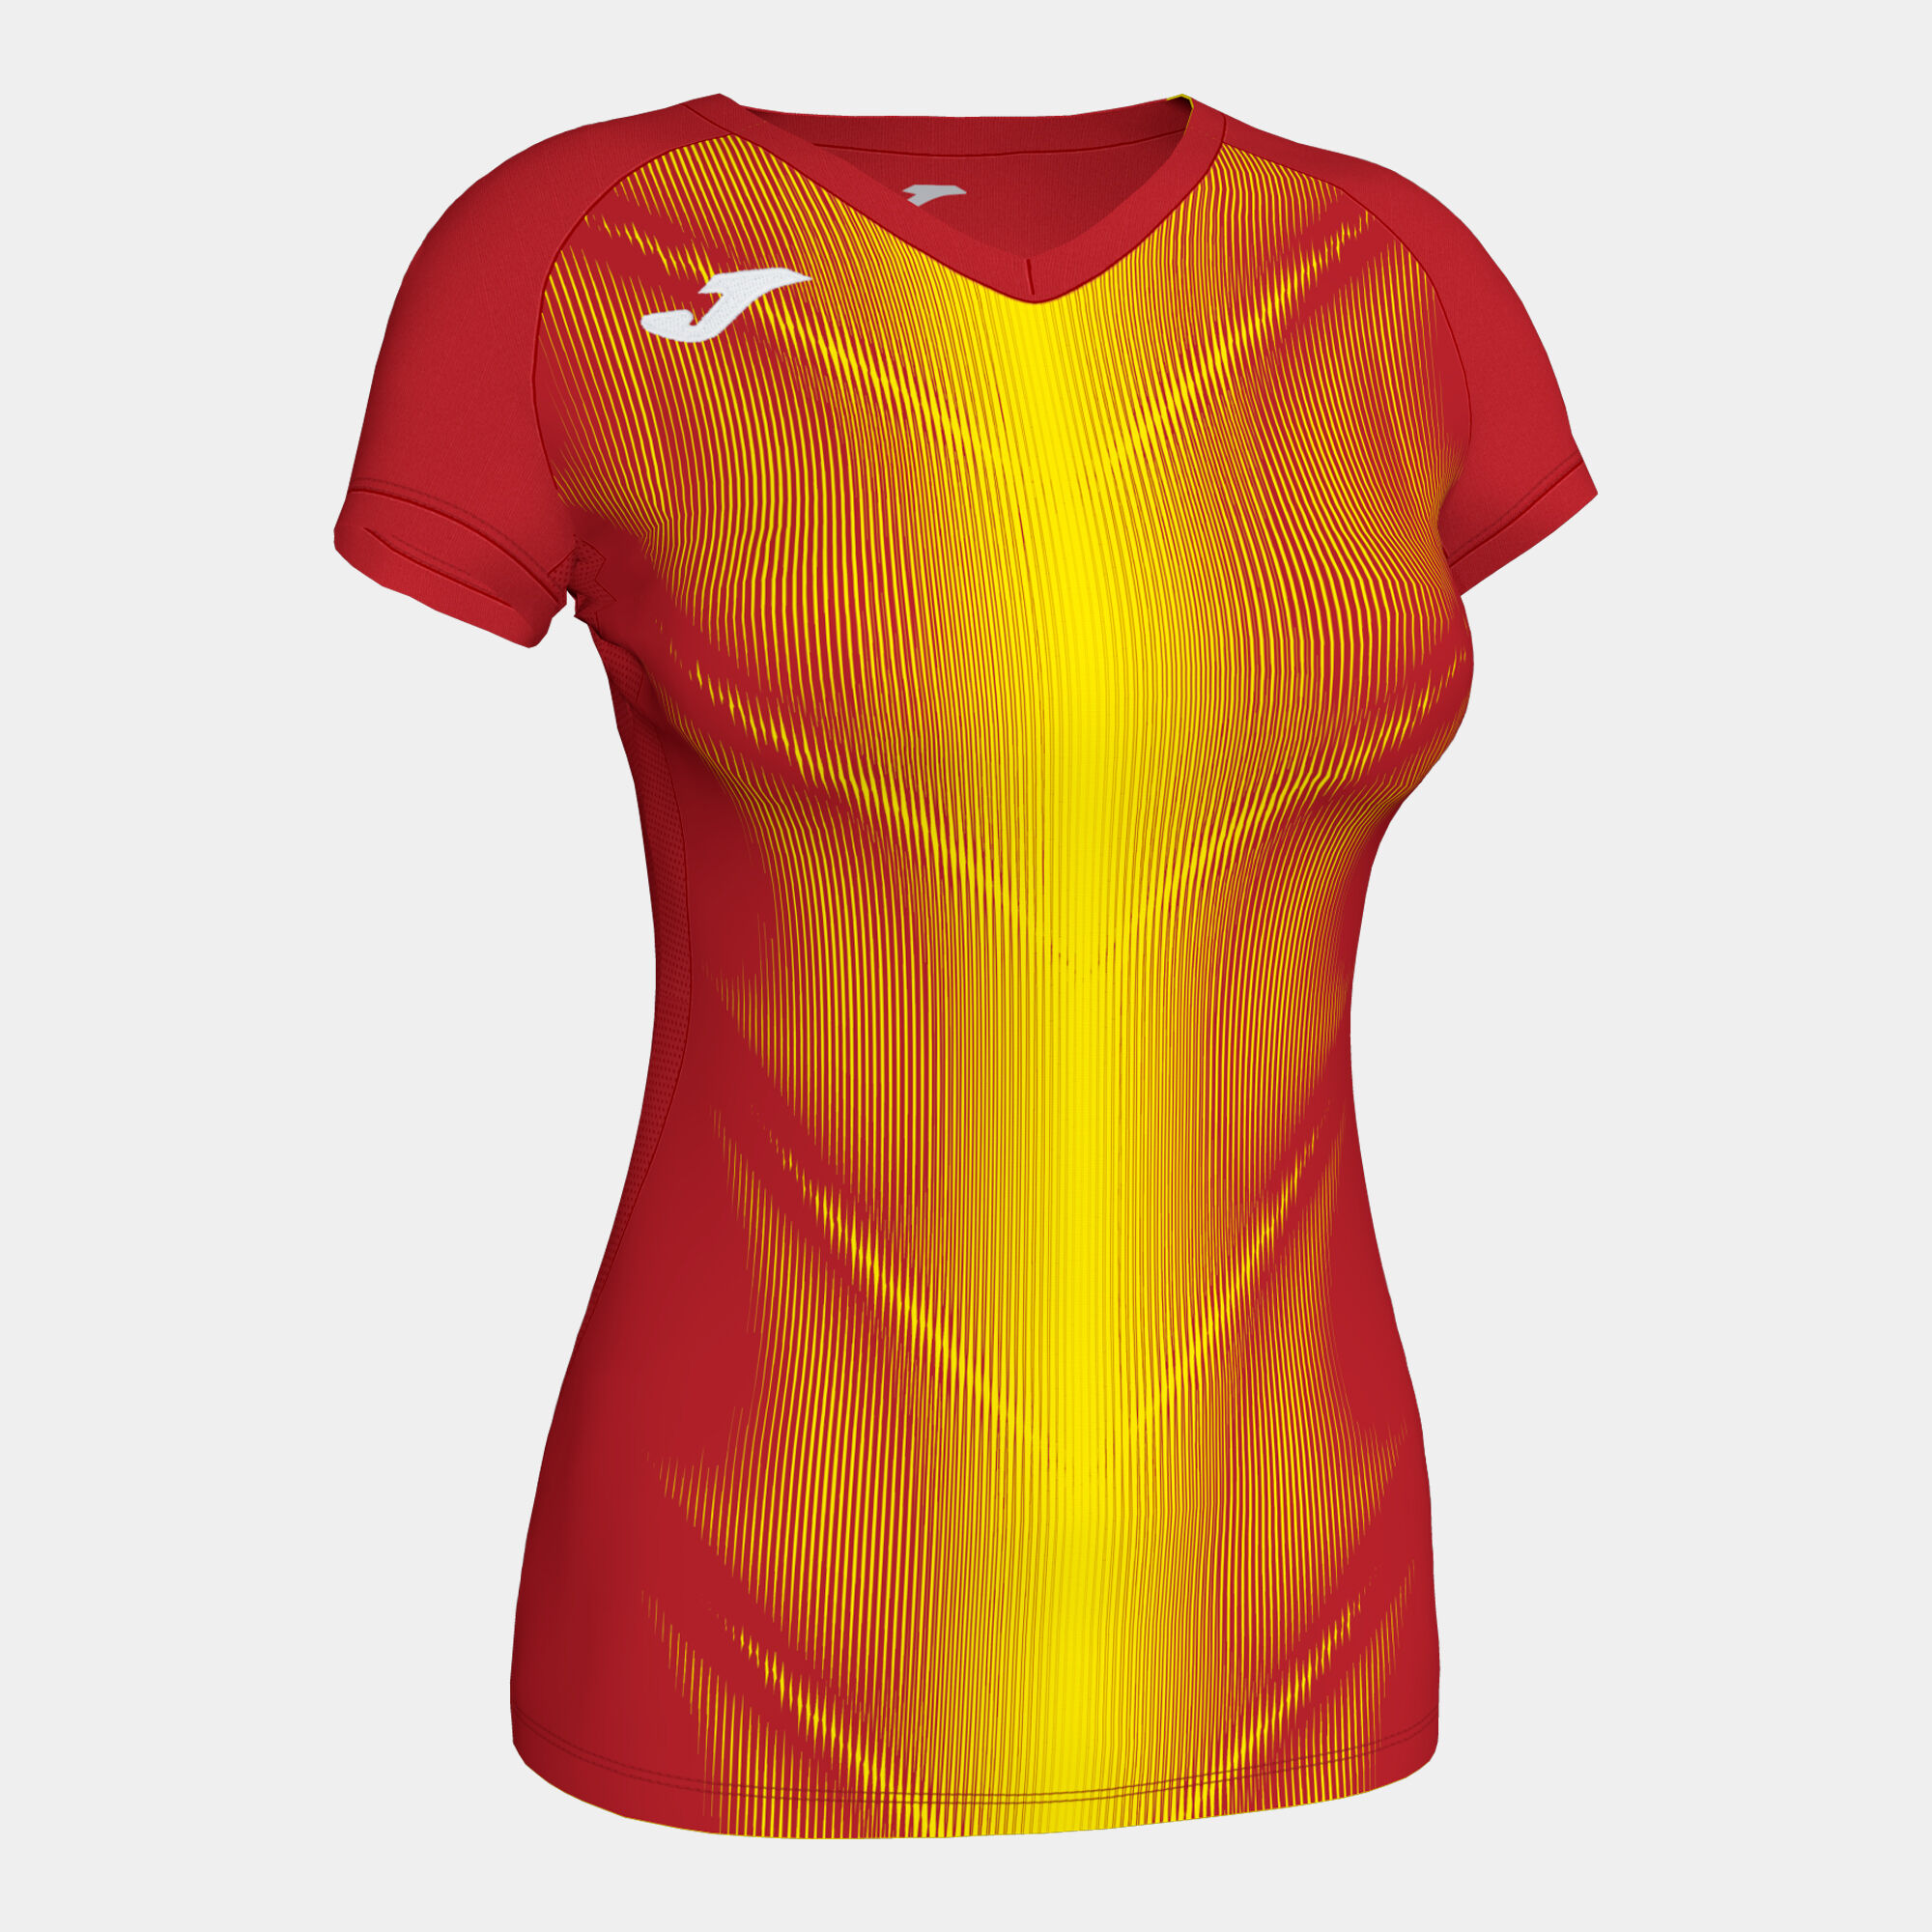 Shirt short sleeve woman Olimpia red yellow